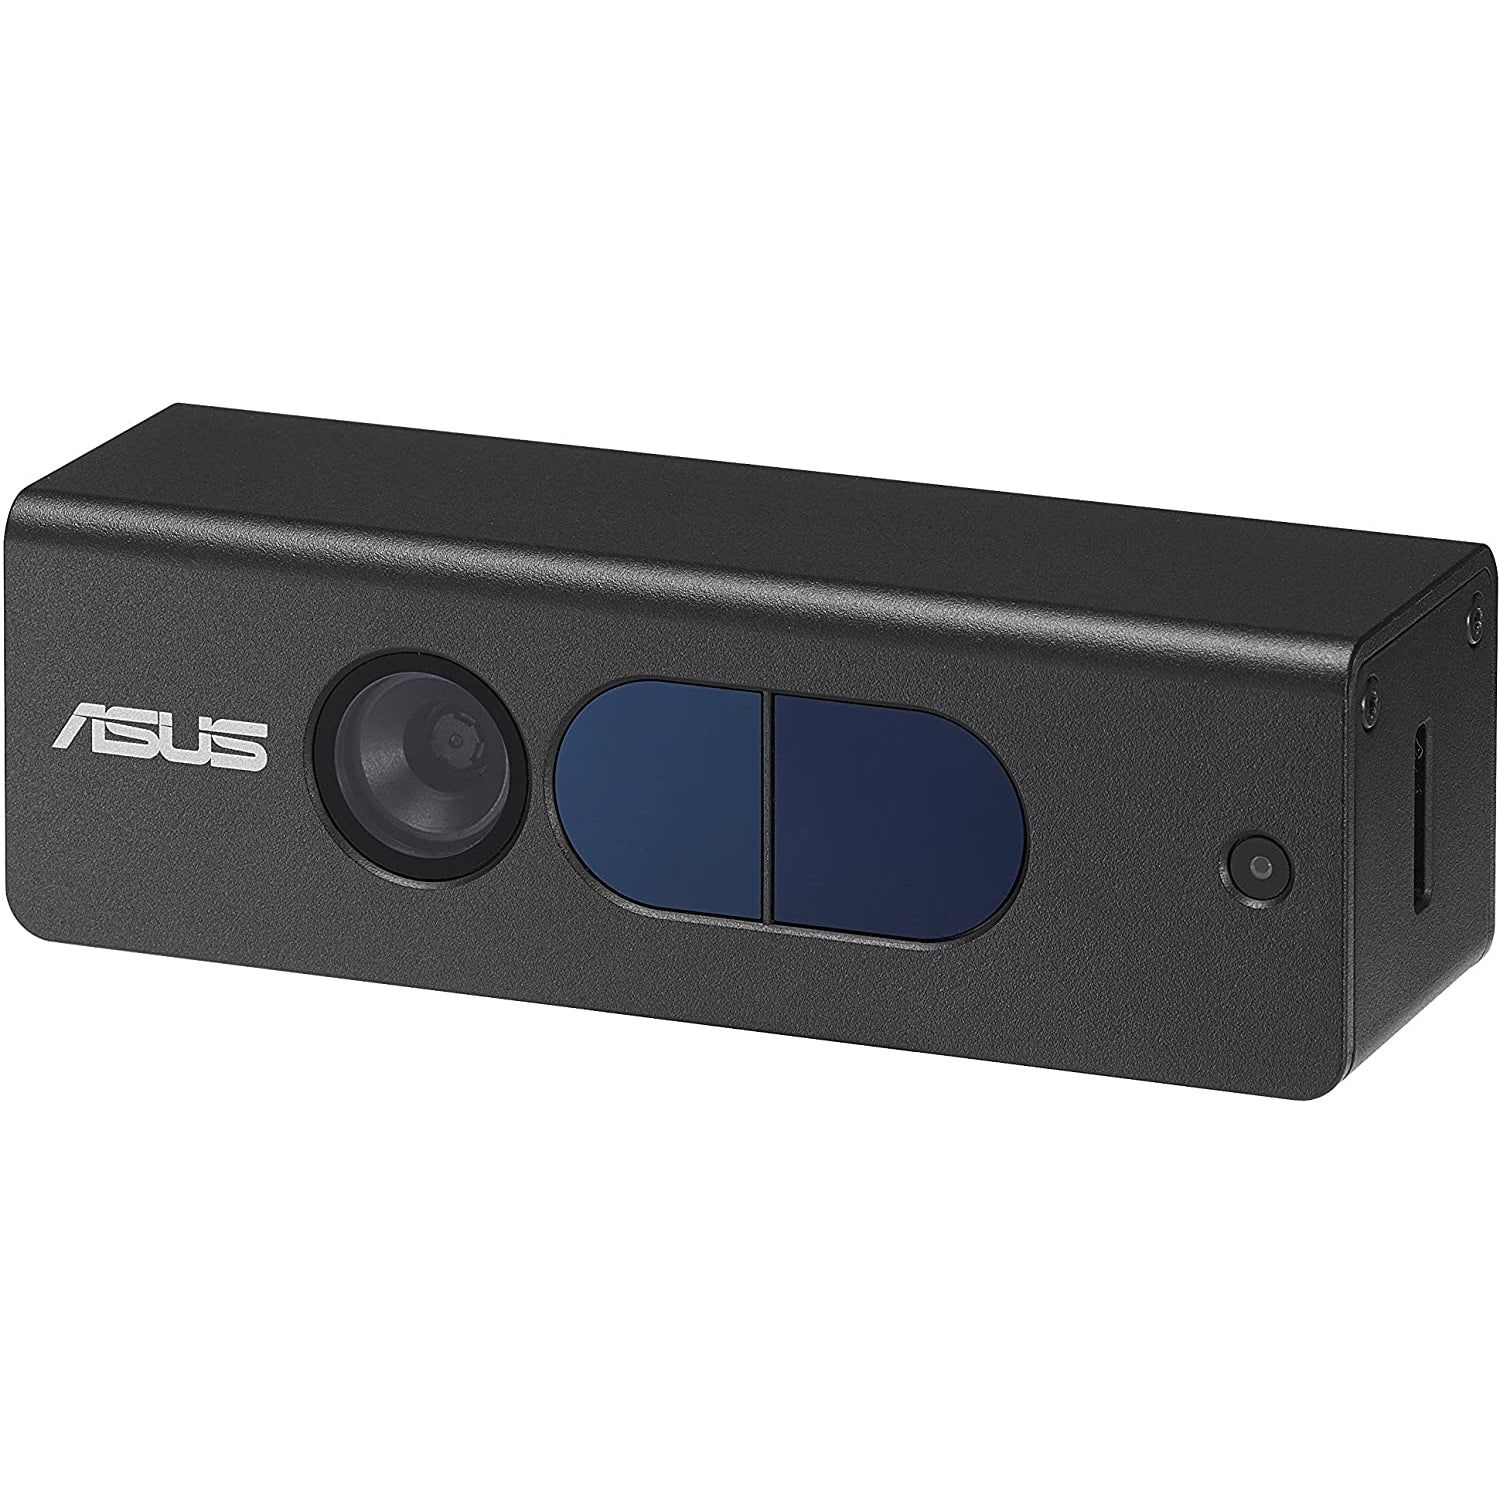 Asus Xtion2 3D RGB and Depth Sensor